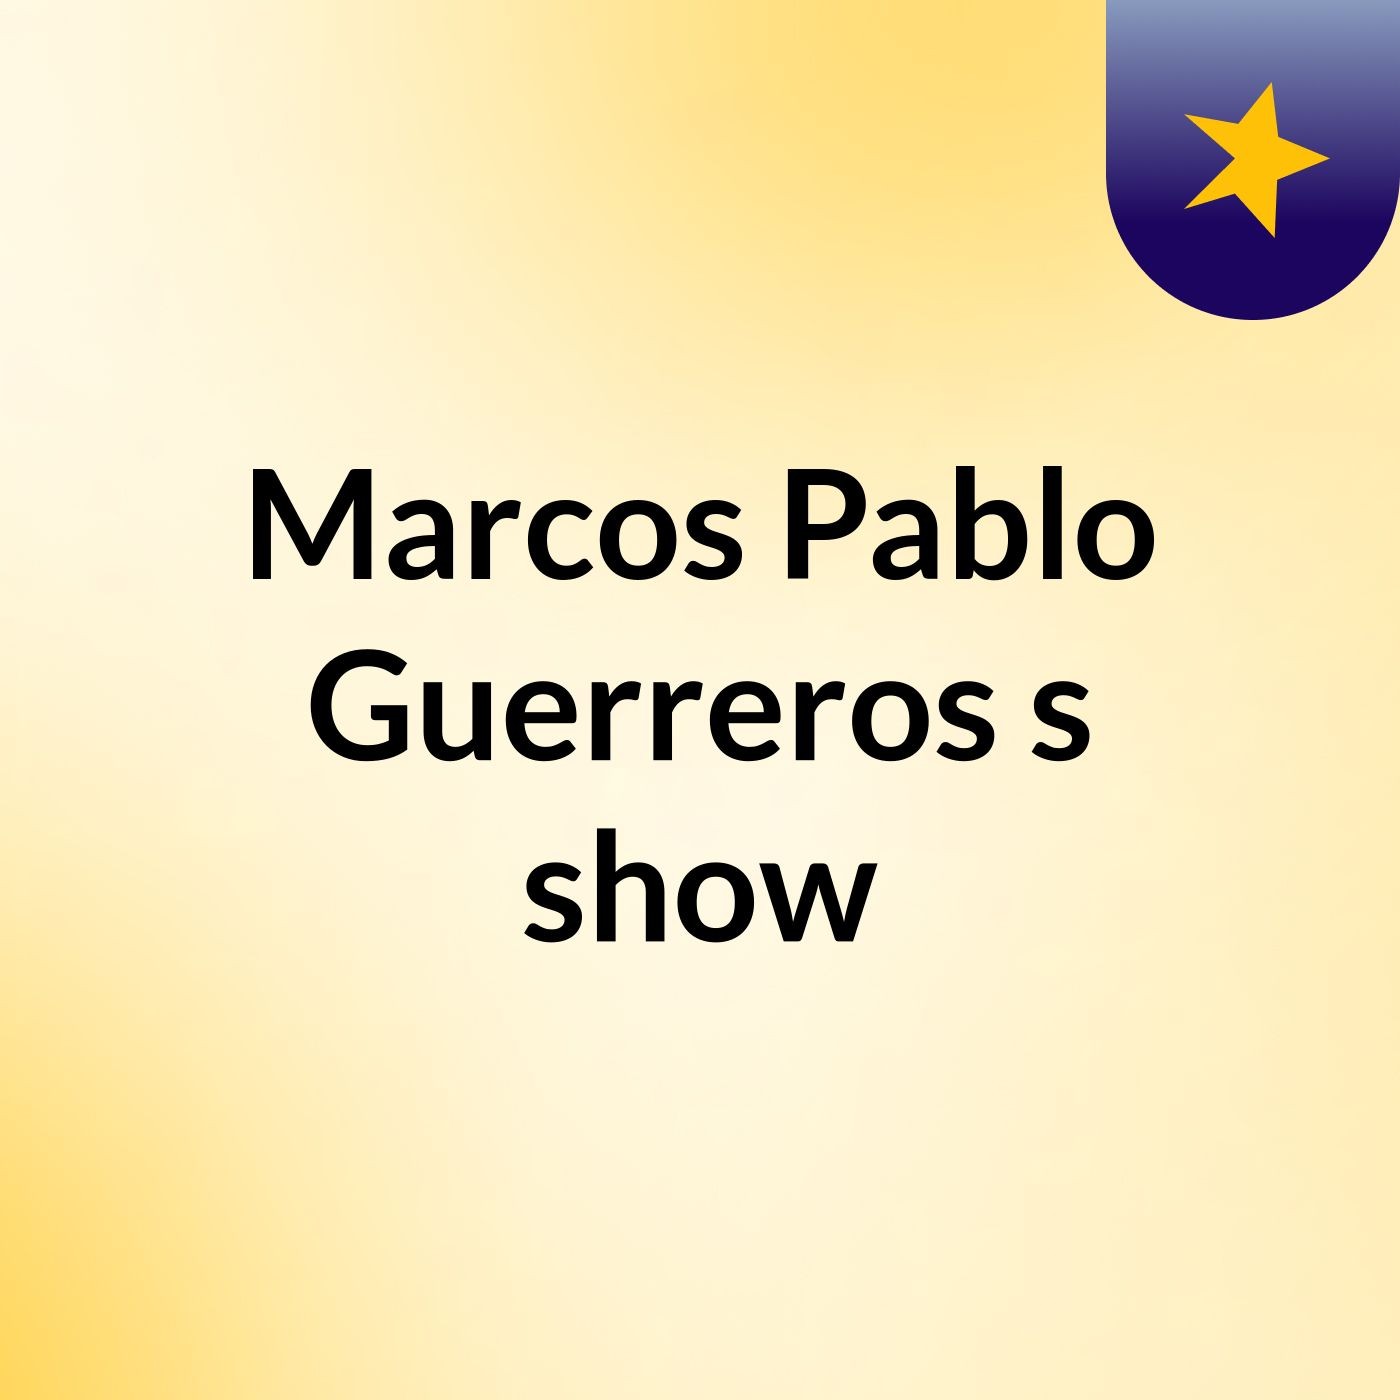 Marcos Pablo Guerreros's show